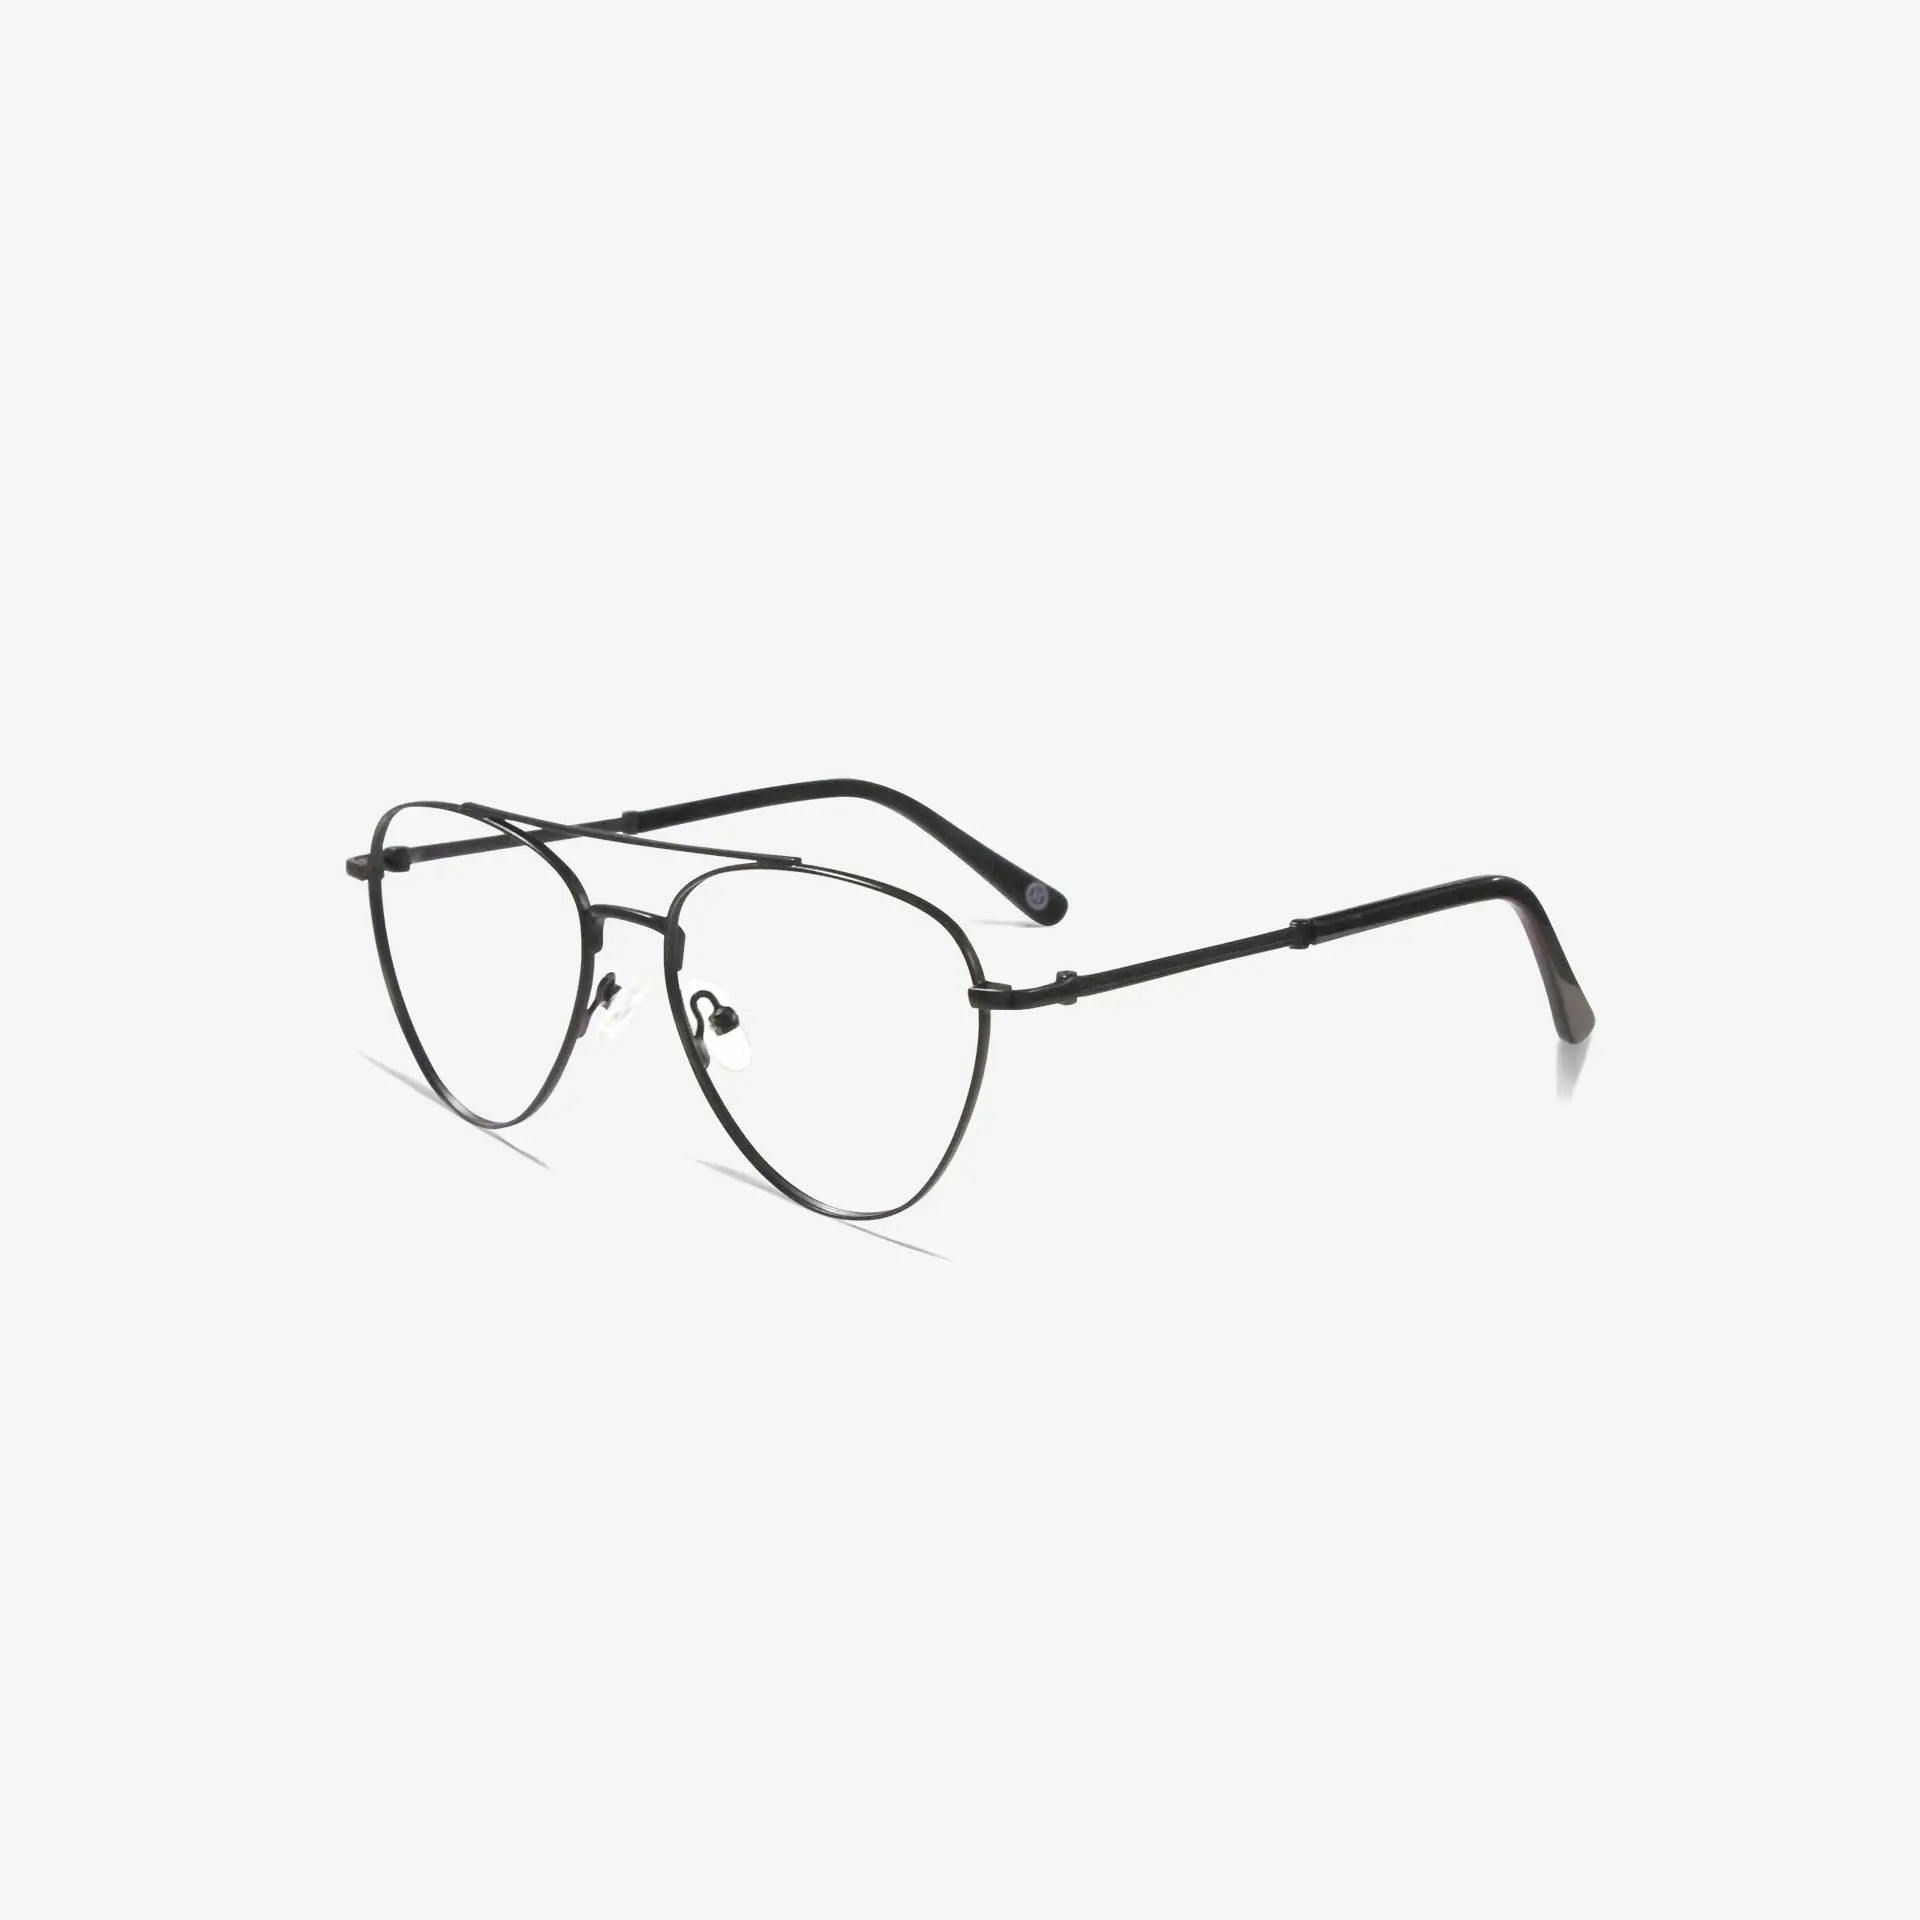 Huxley glasses | Prop Midnight 